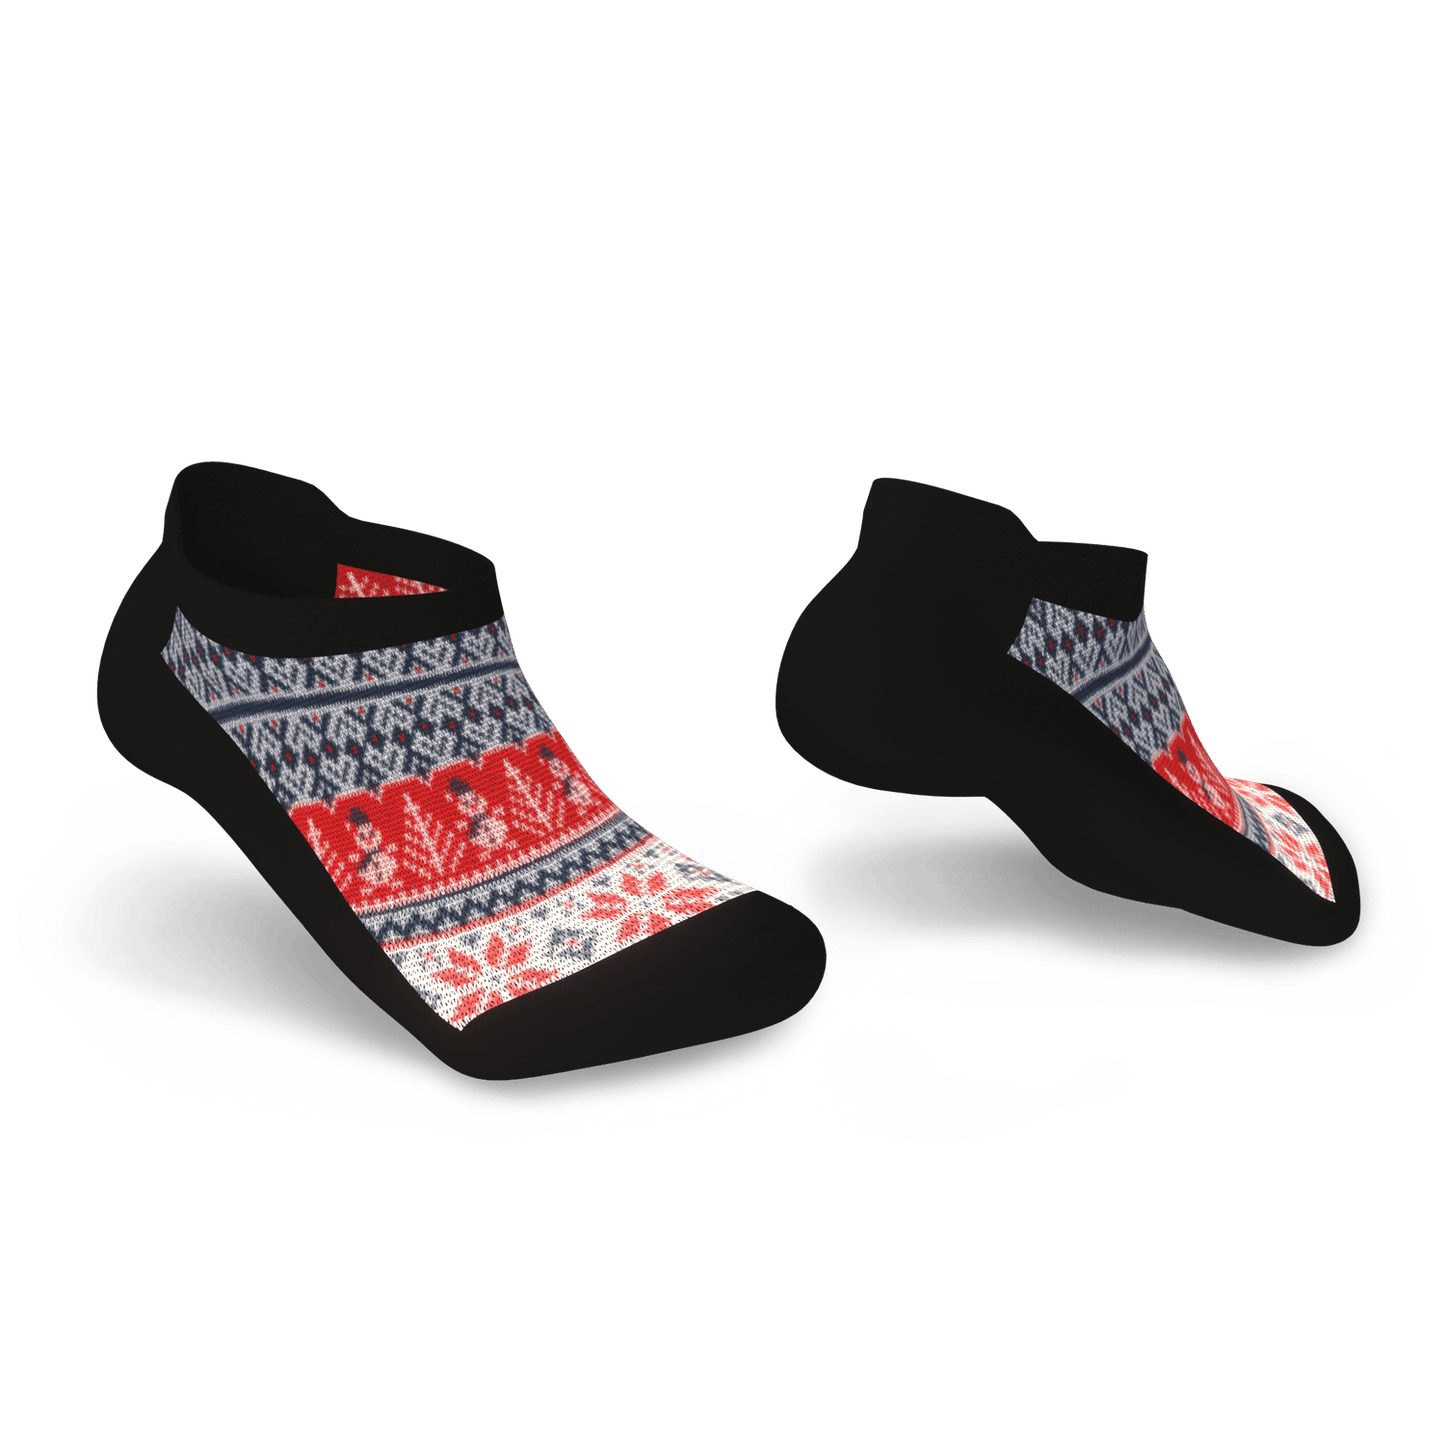 Sweater Weather Diabetic Ankle Socks